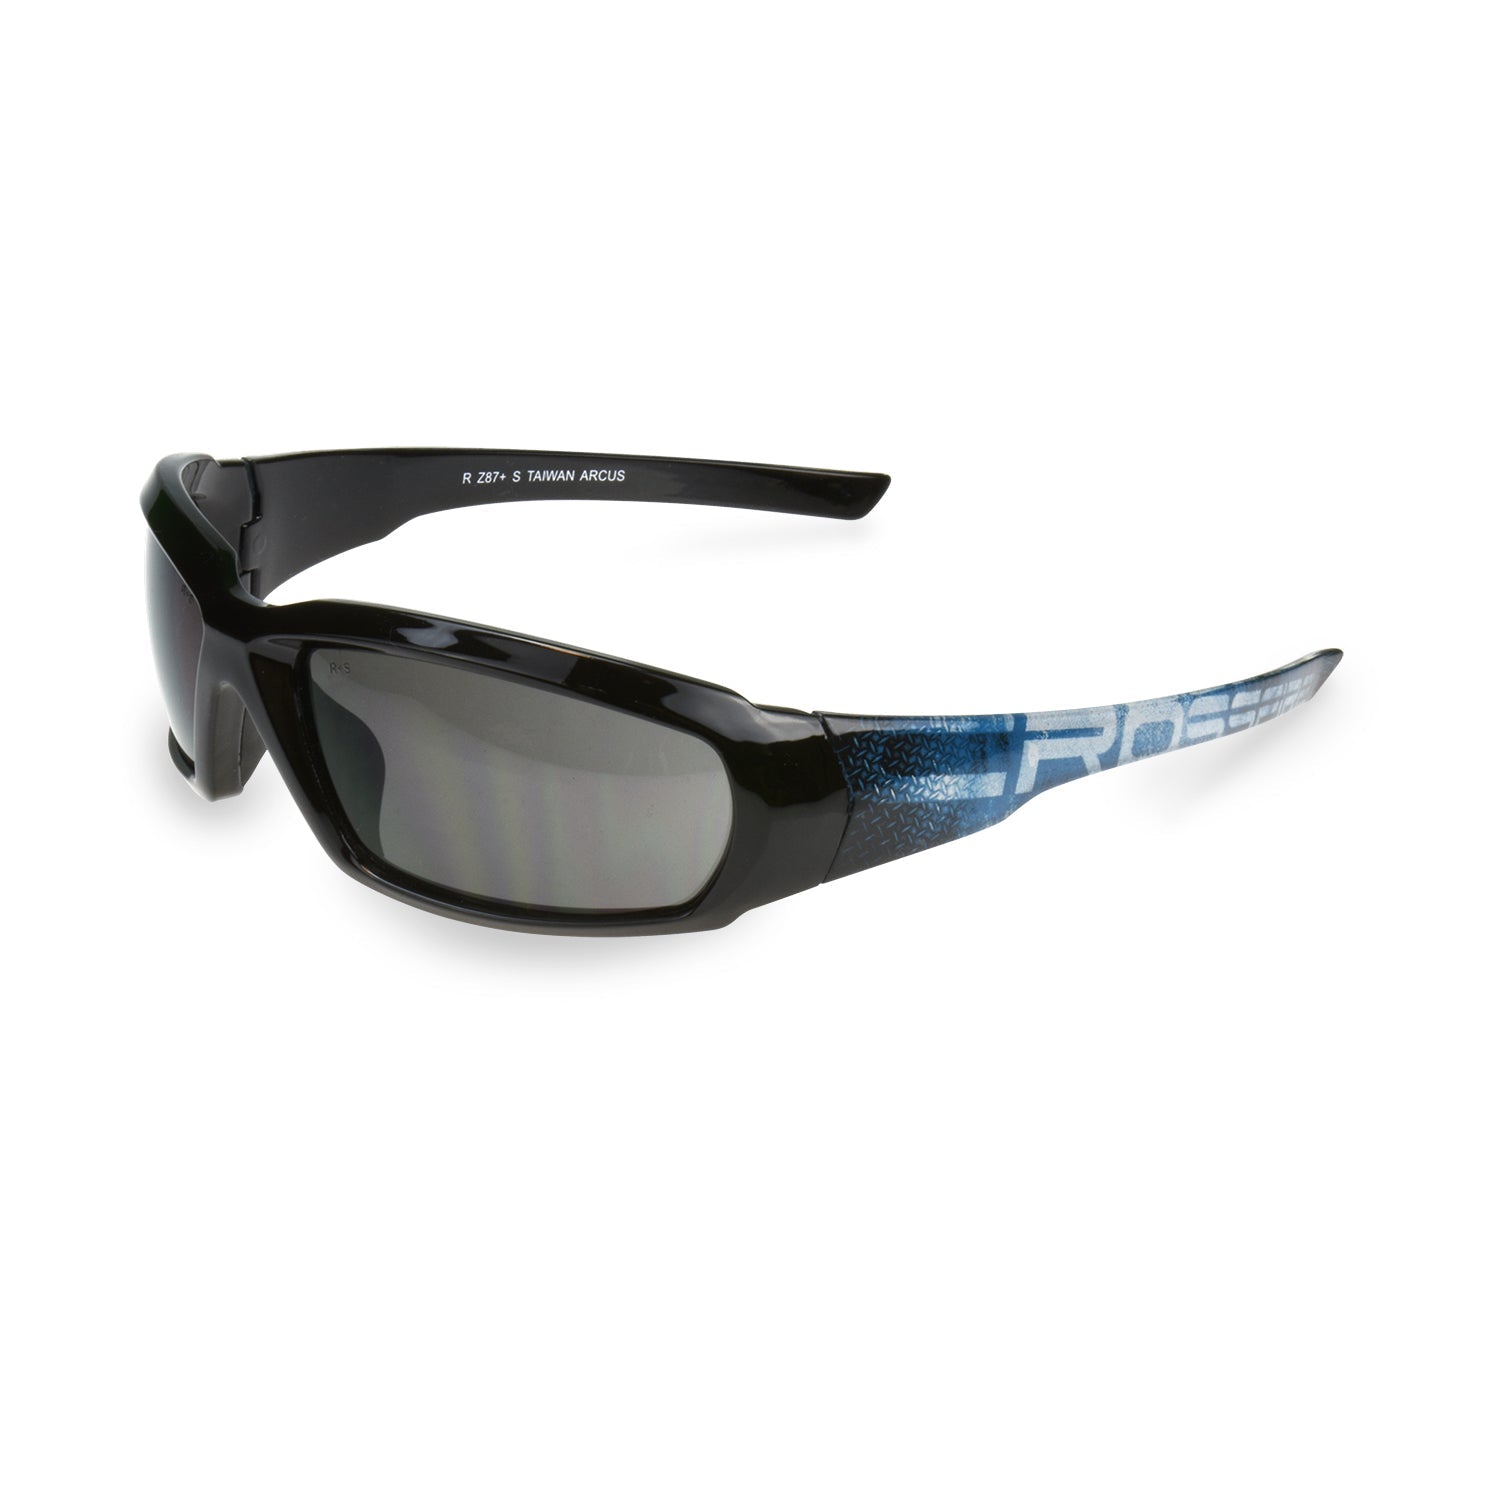 Crossfire ARCUS Premium Safety Eyewear - Black Frame - Smoke Lens